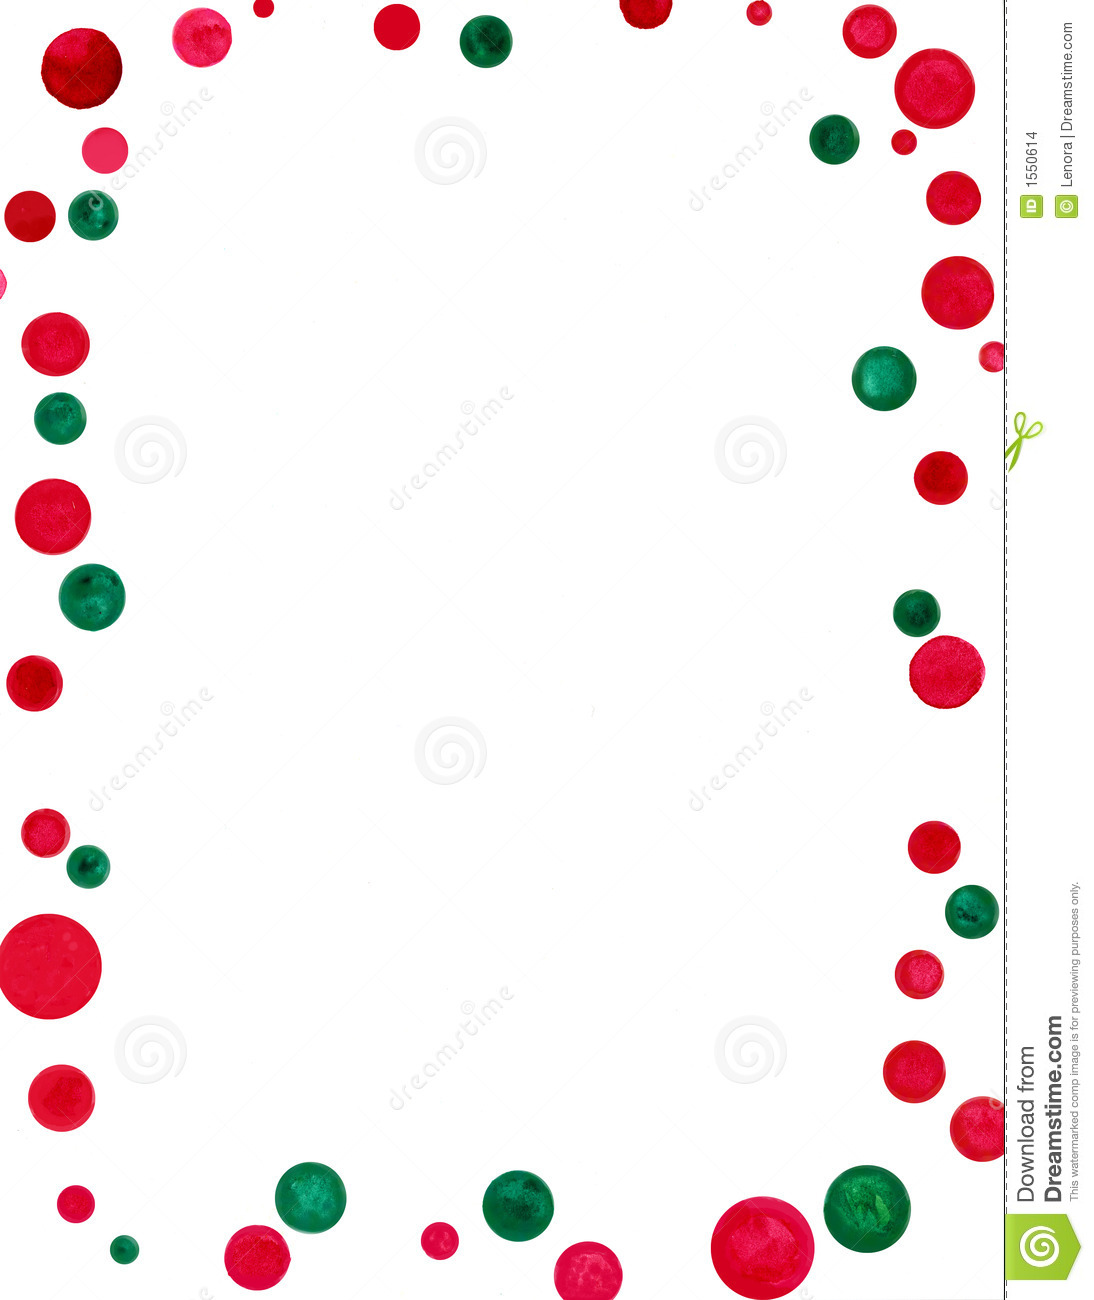 Colorful Polka Dot Border Christmas Polka Dots